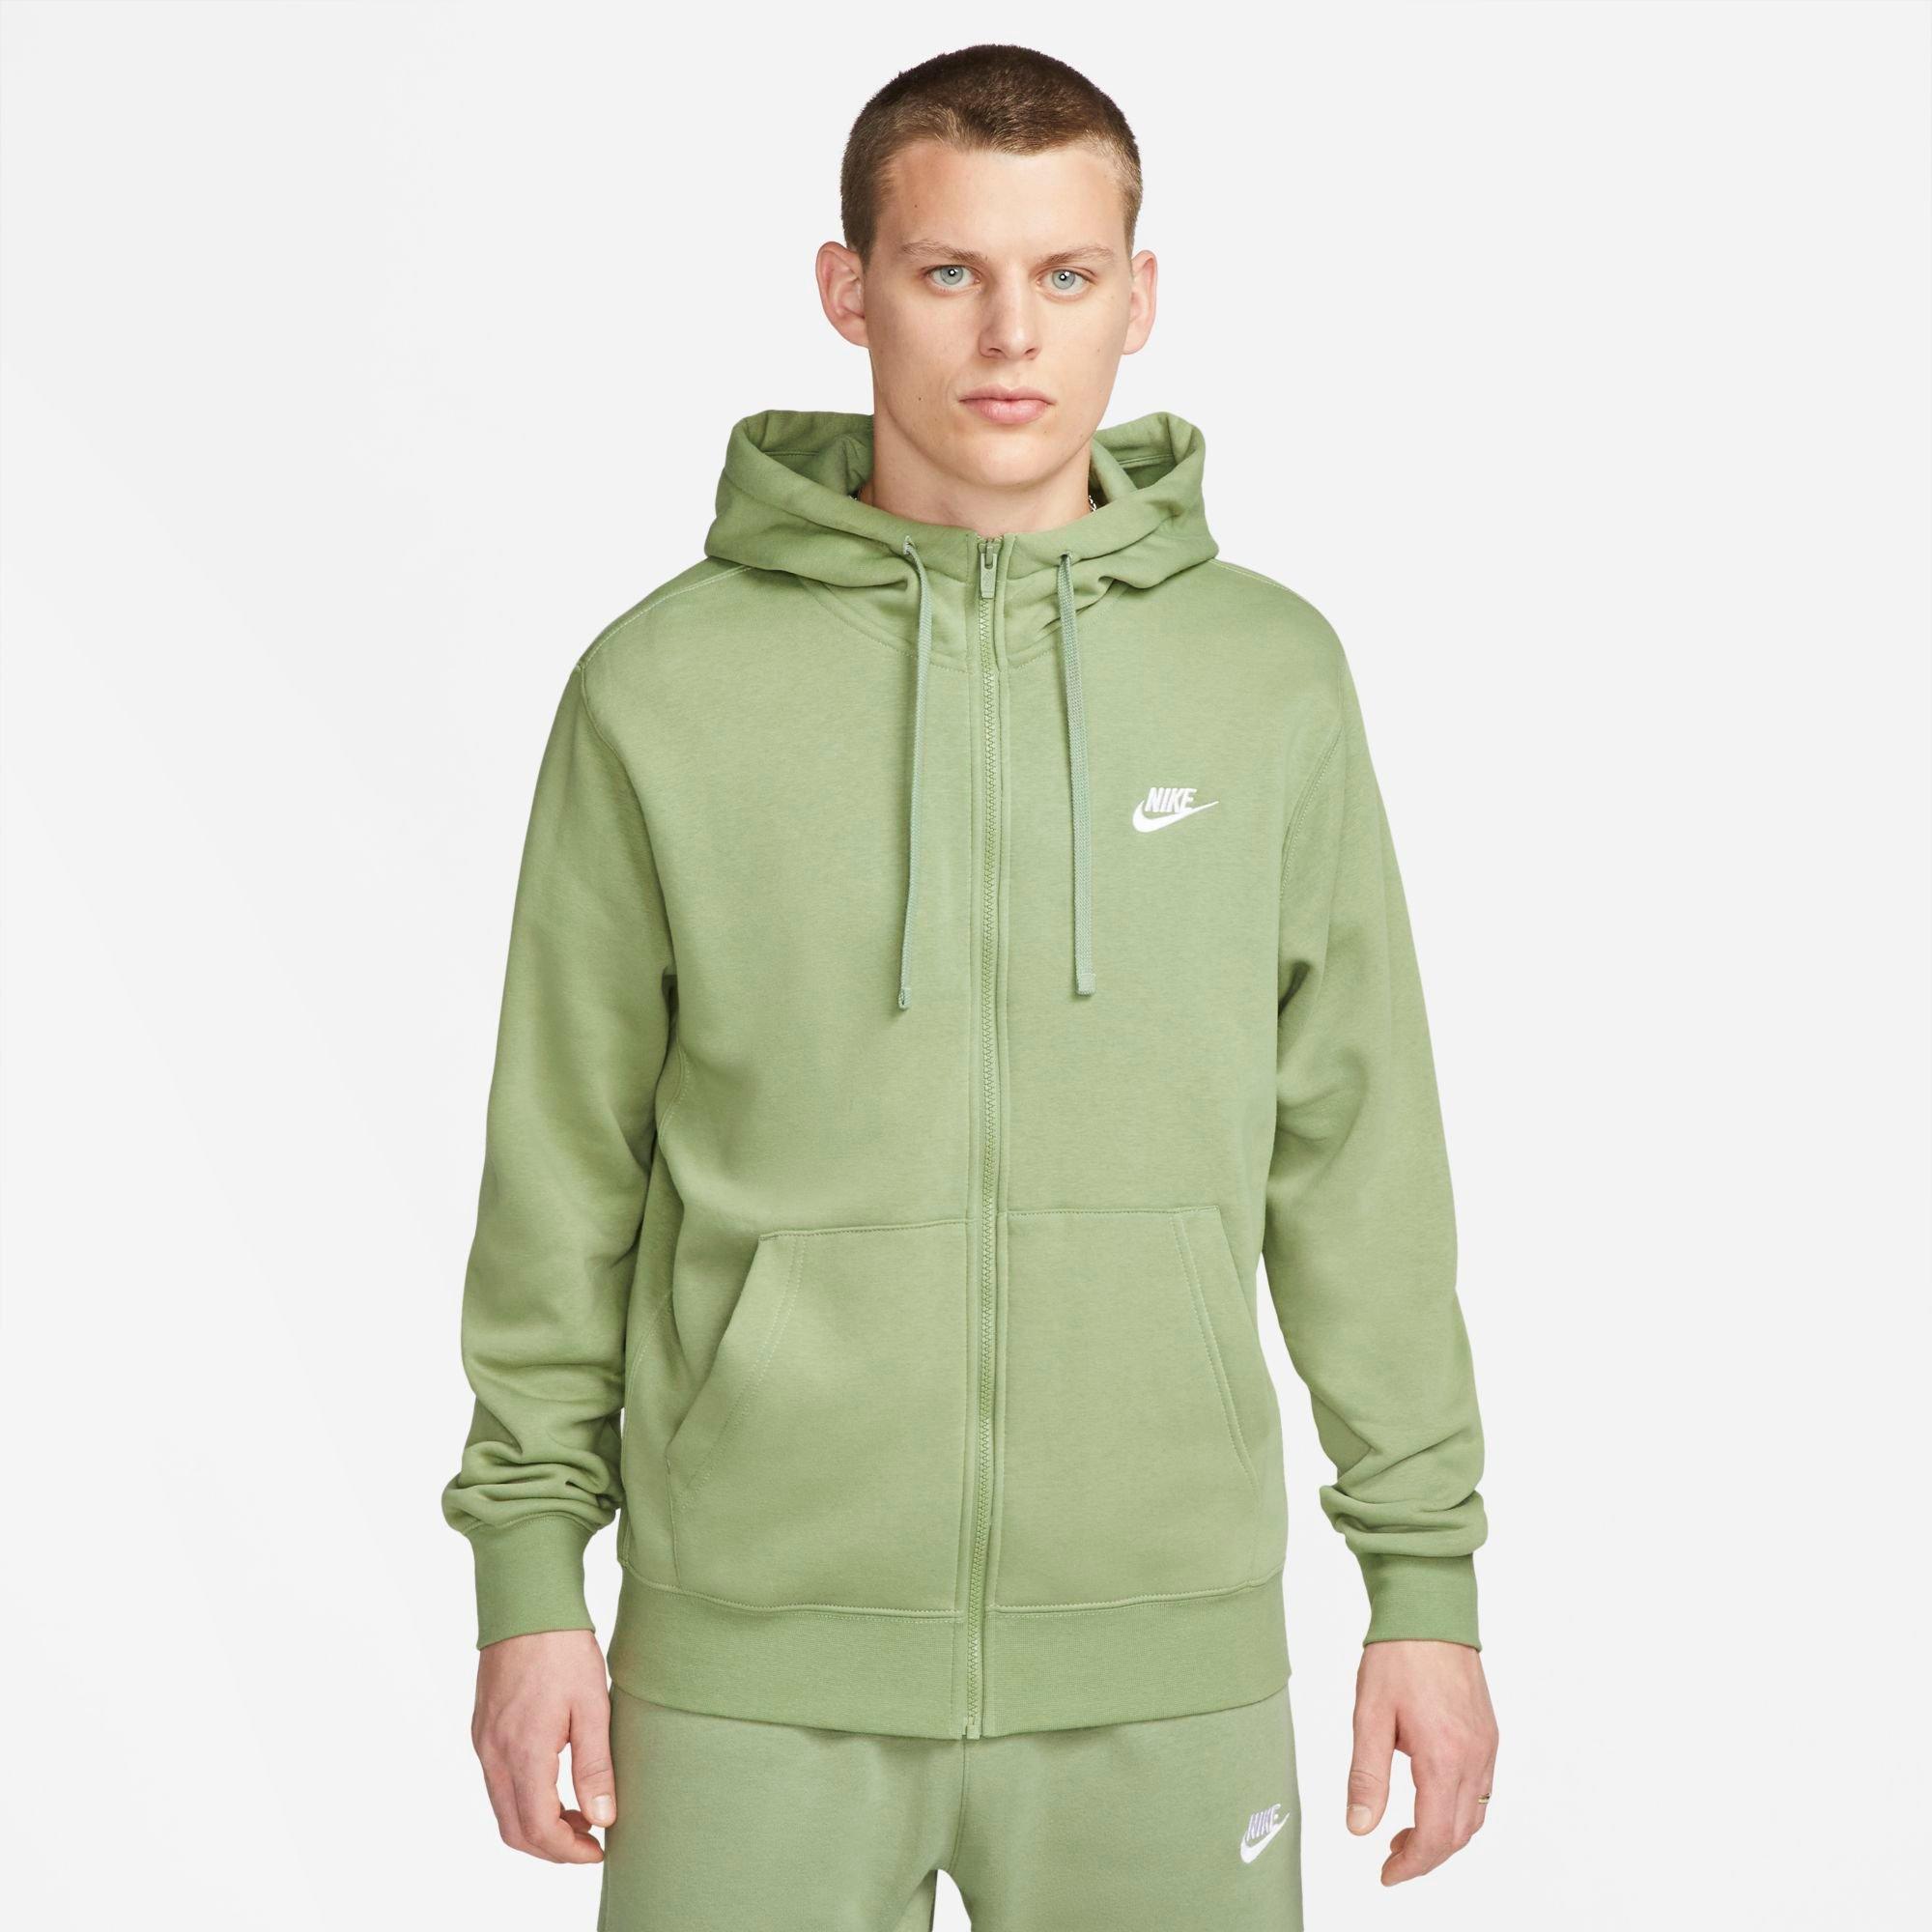 Nike Sportswear Sport Essentials+ Fleece Pants Sangria / Vivid Green